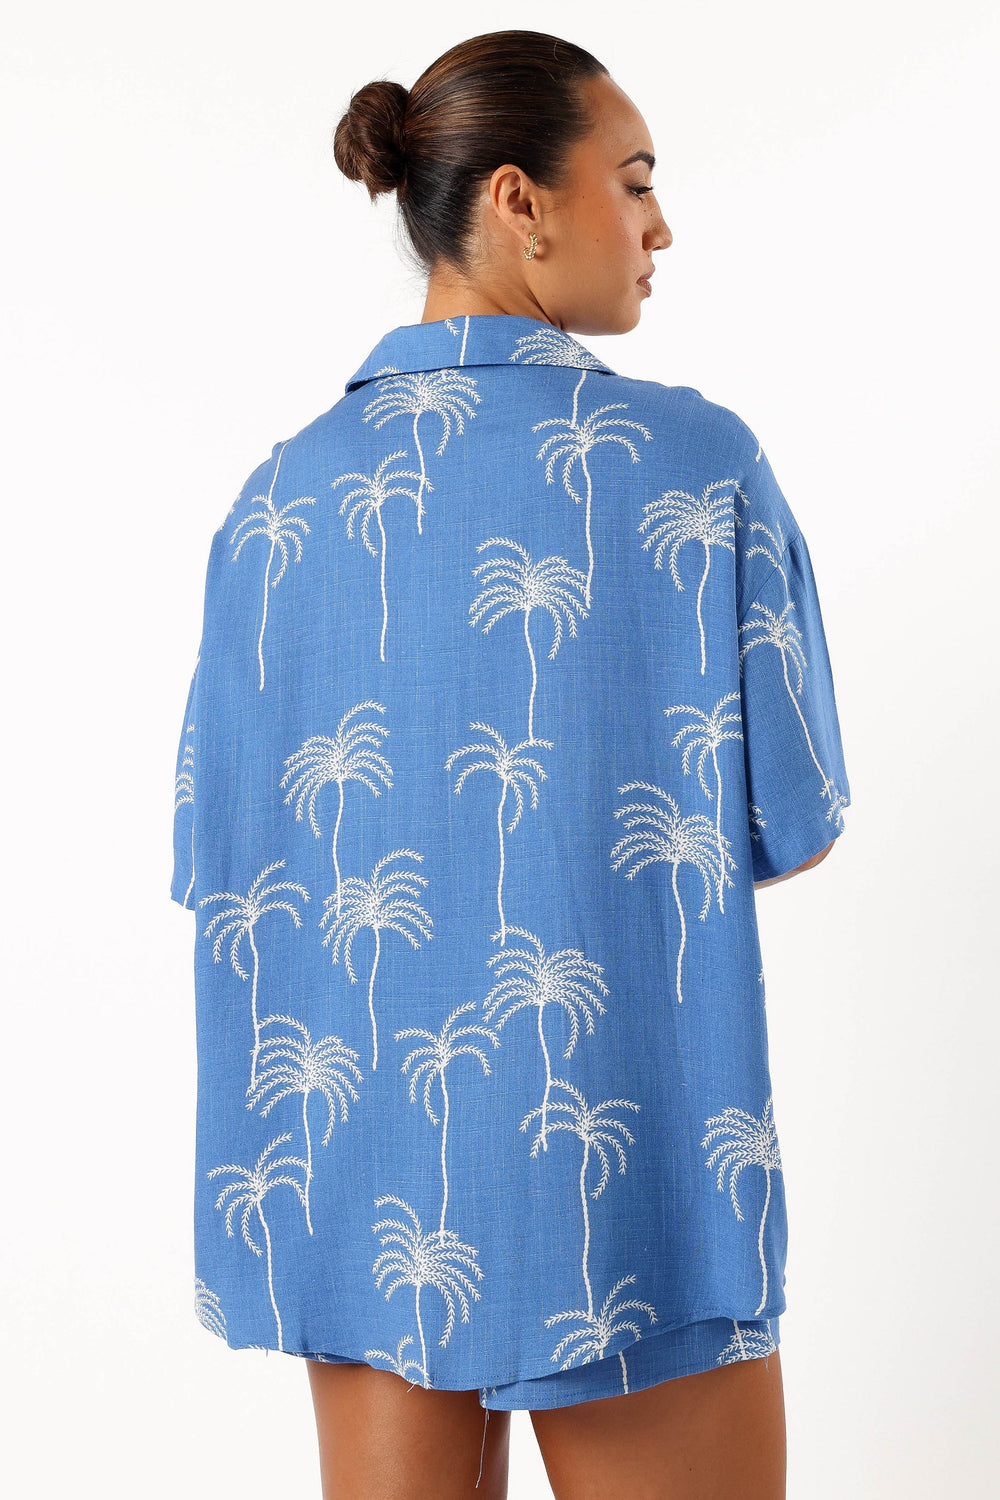 TOPS @Amira Short Sleeve Shirt - Blue Palm Print